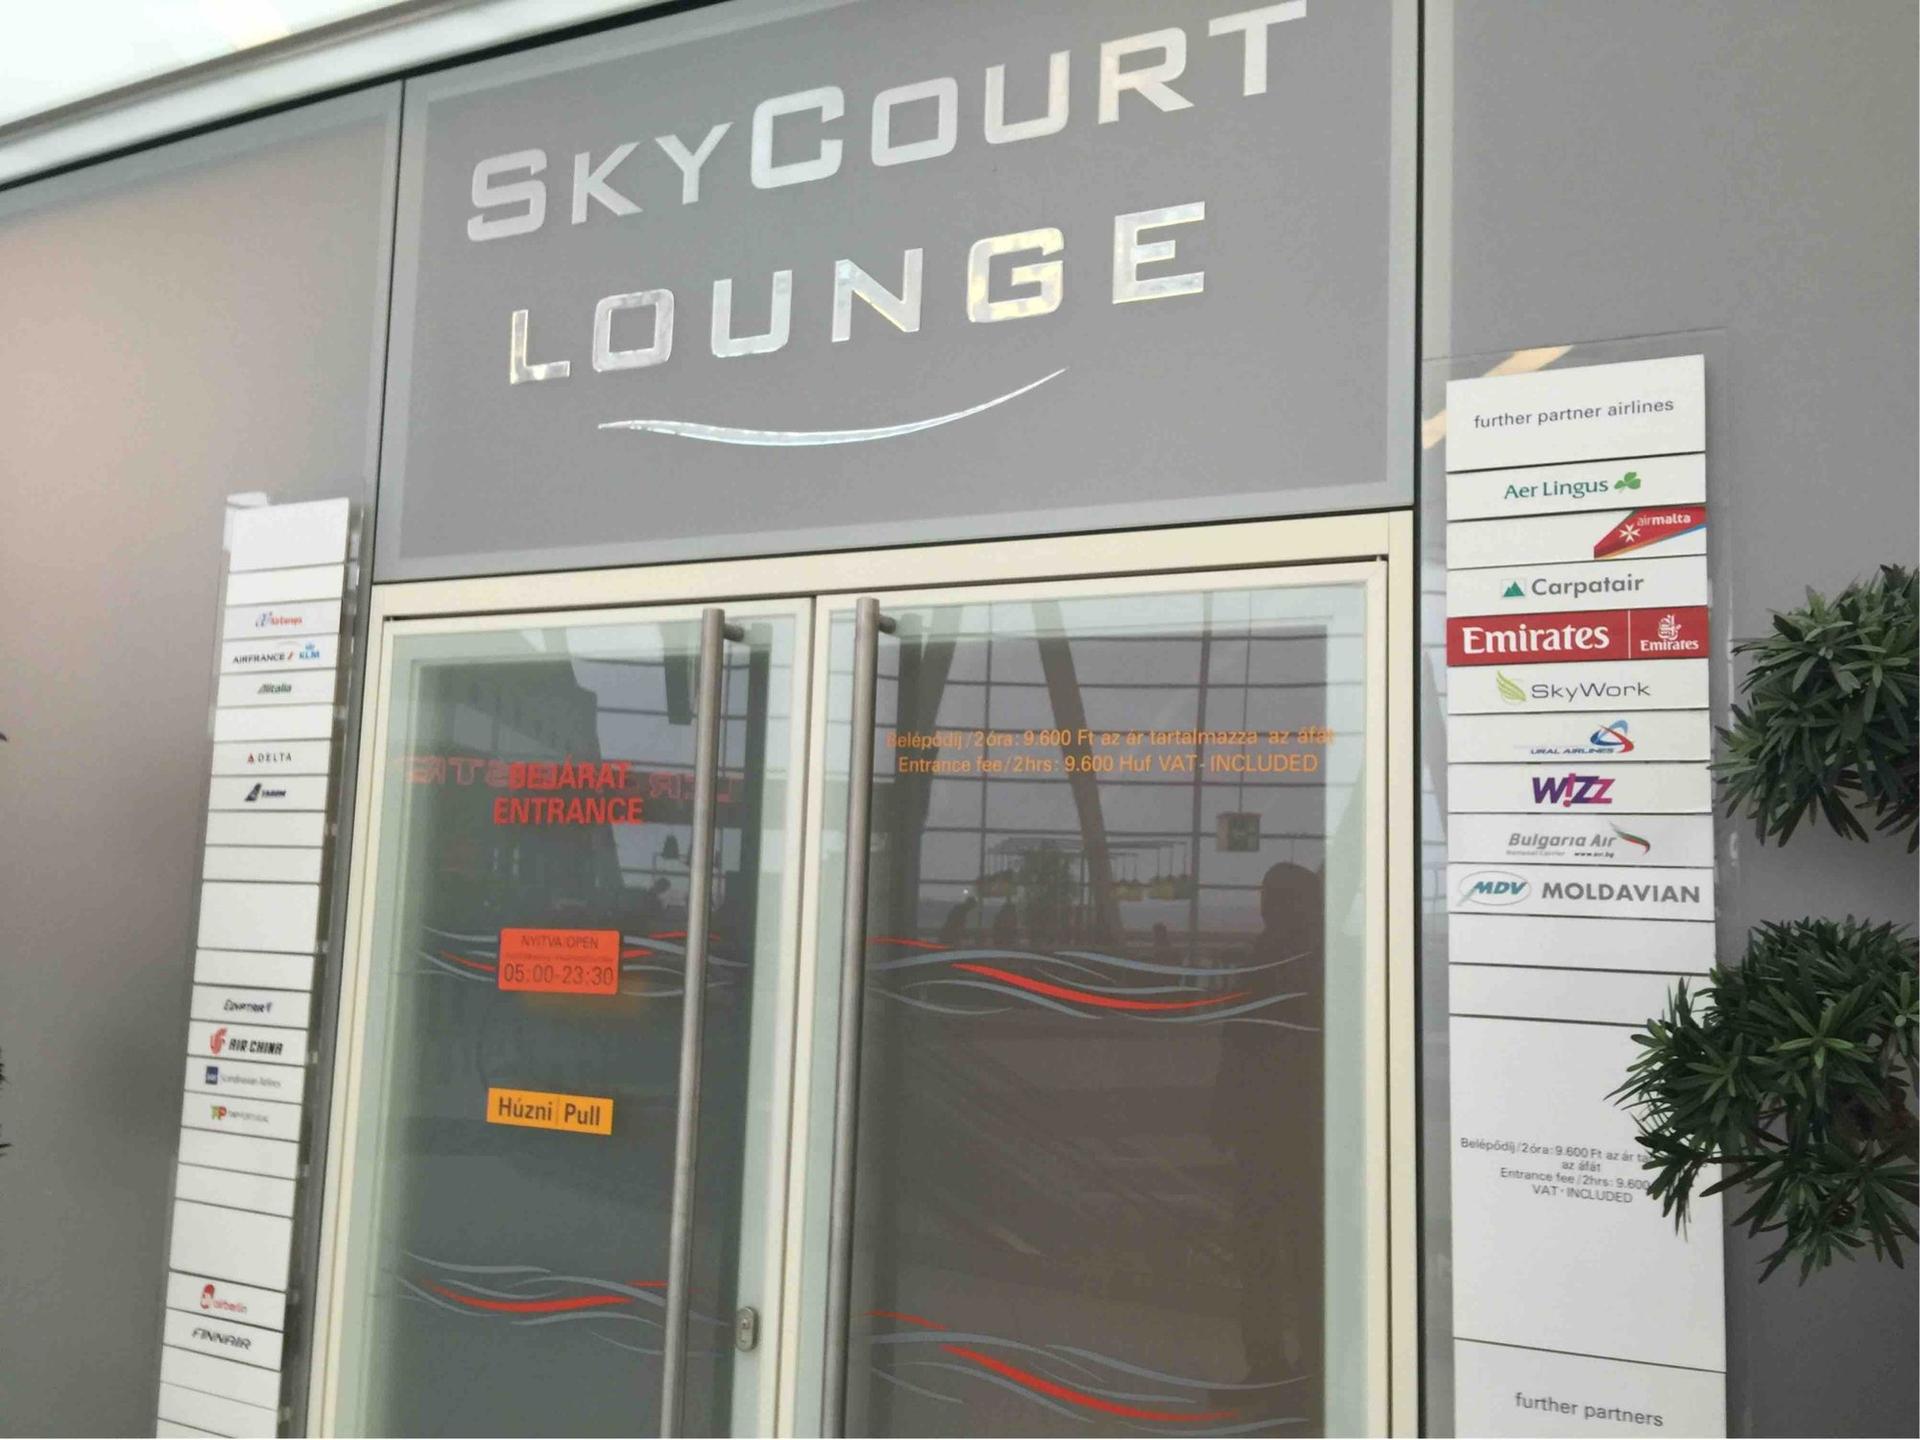 SkyCourt Lounge image 10 of 23